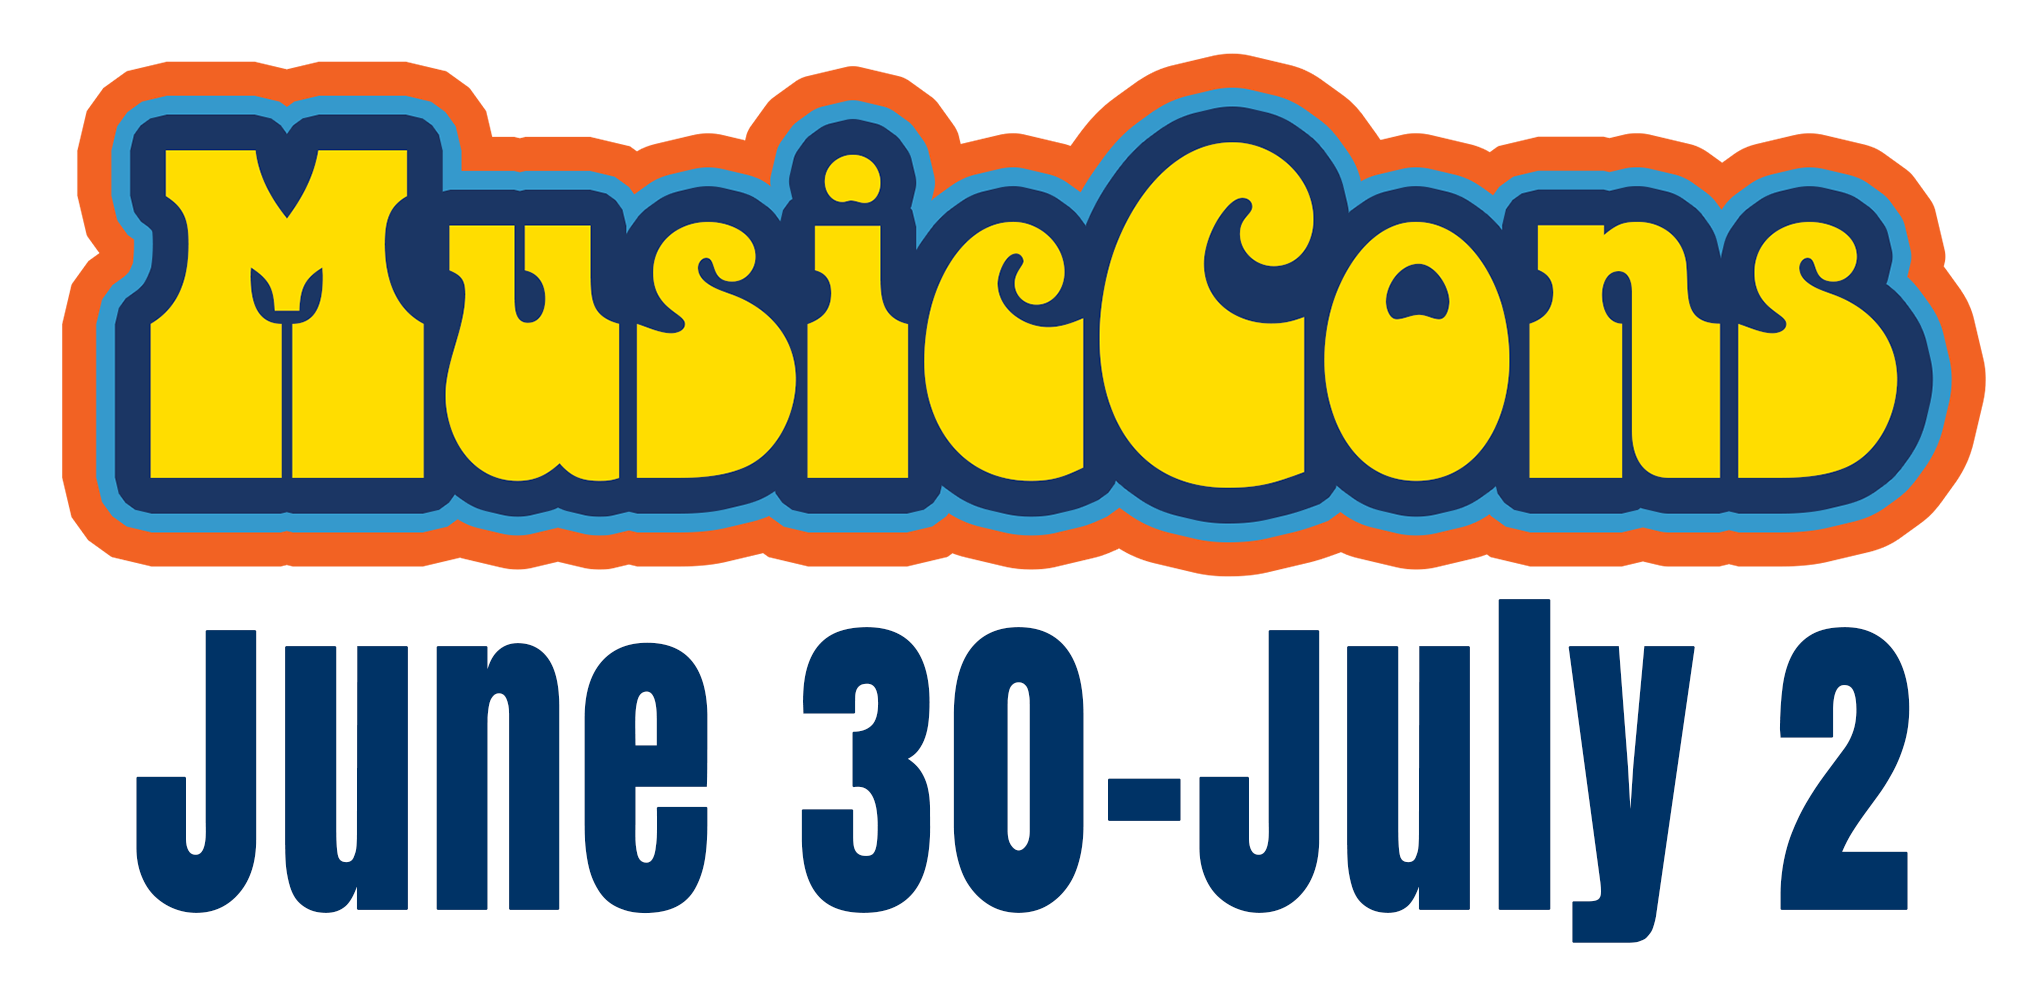 Collectibles Extravaganza MusicCon - Concerts, Movie & TV Car Show - June 30-July 2, 2023